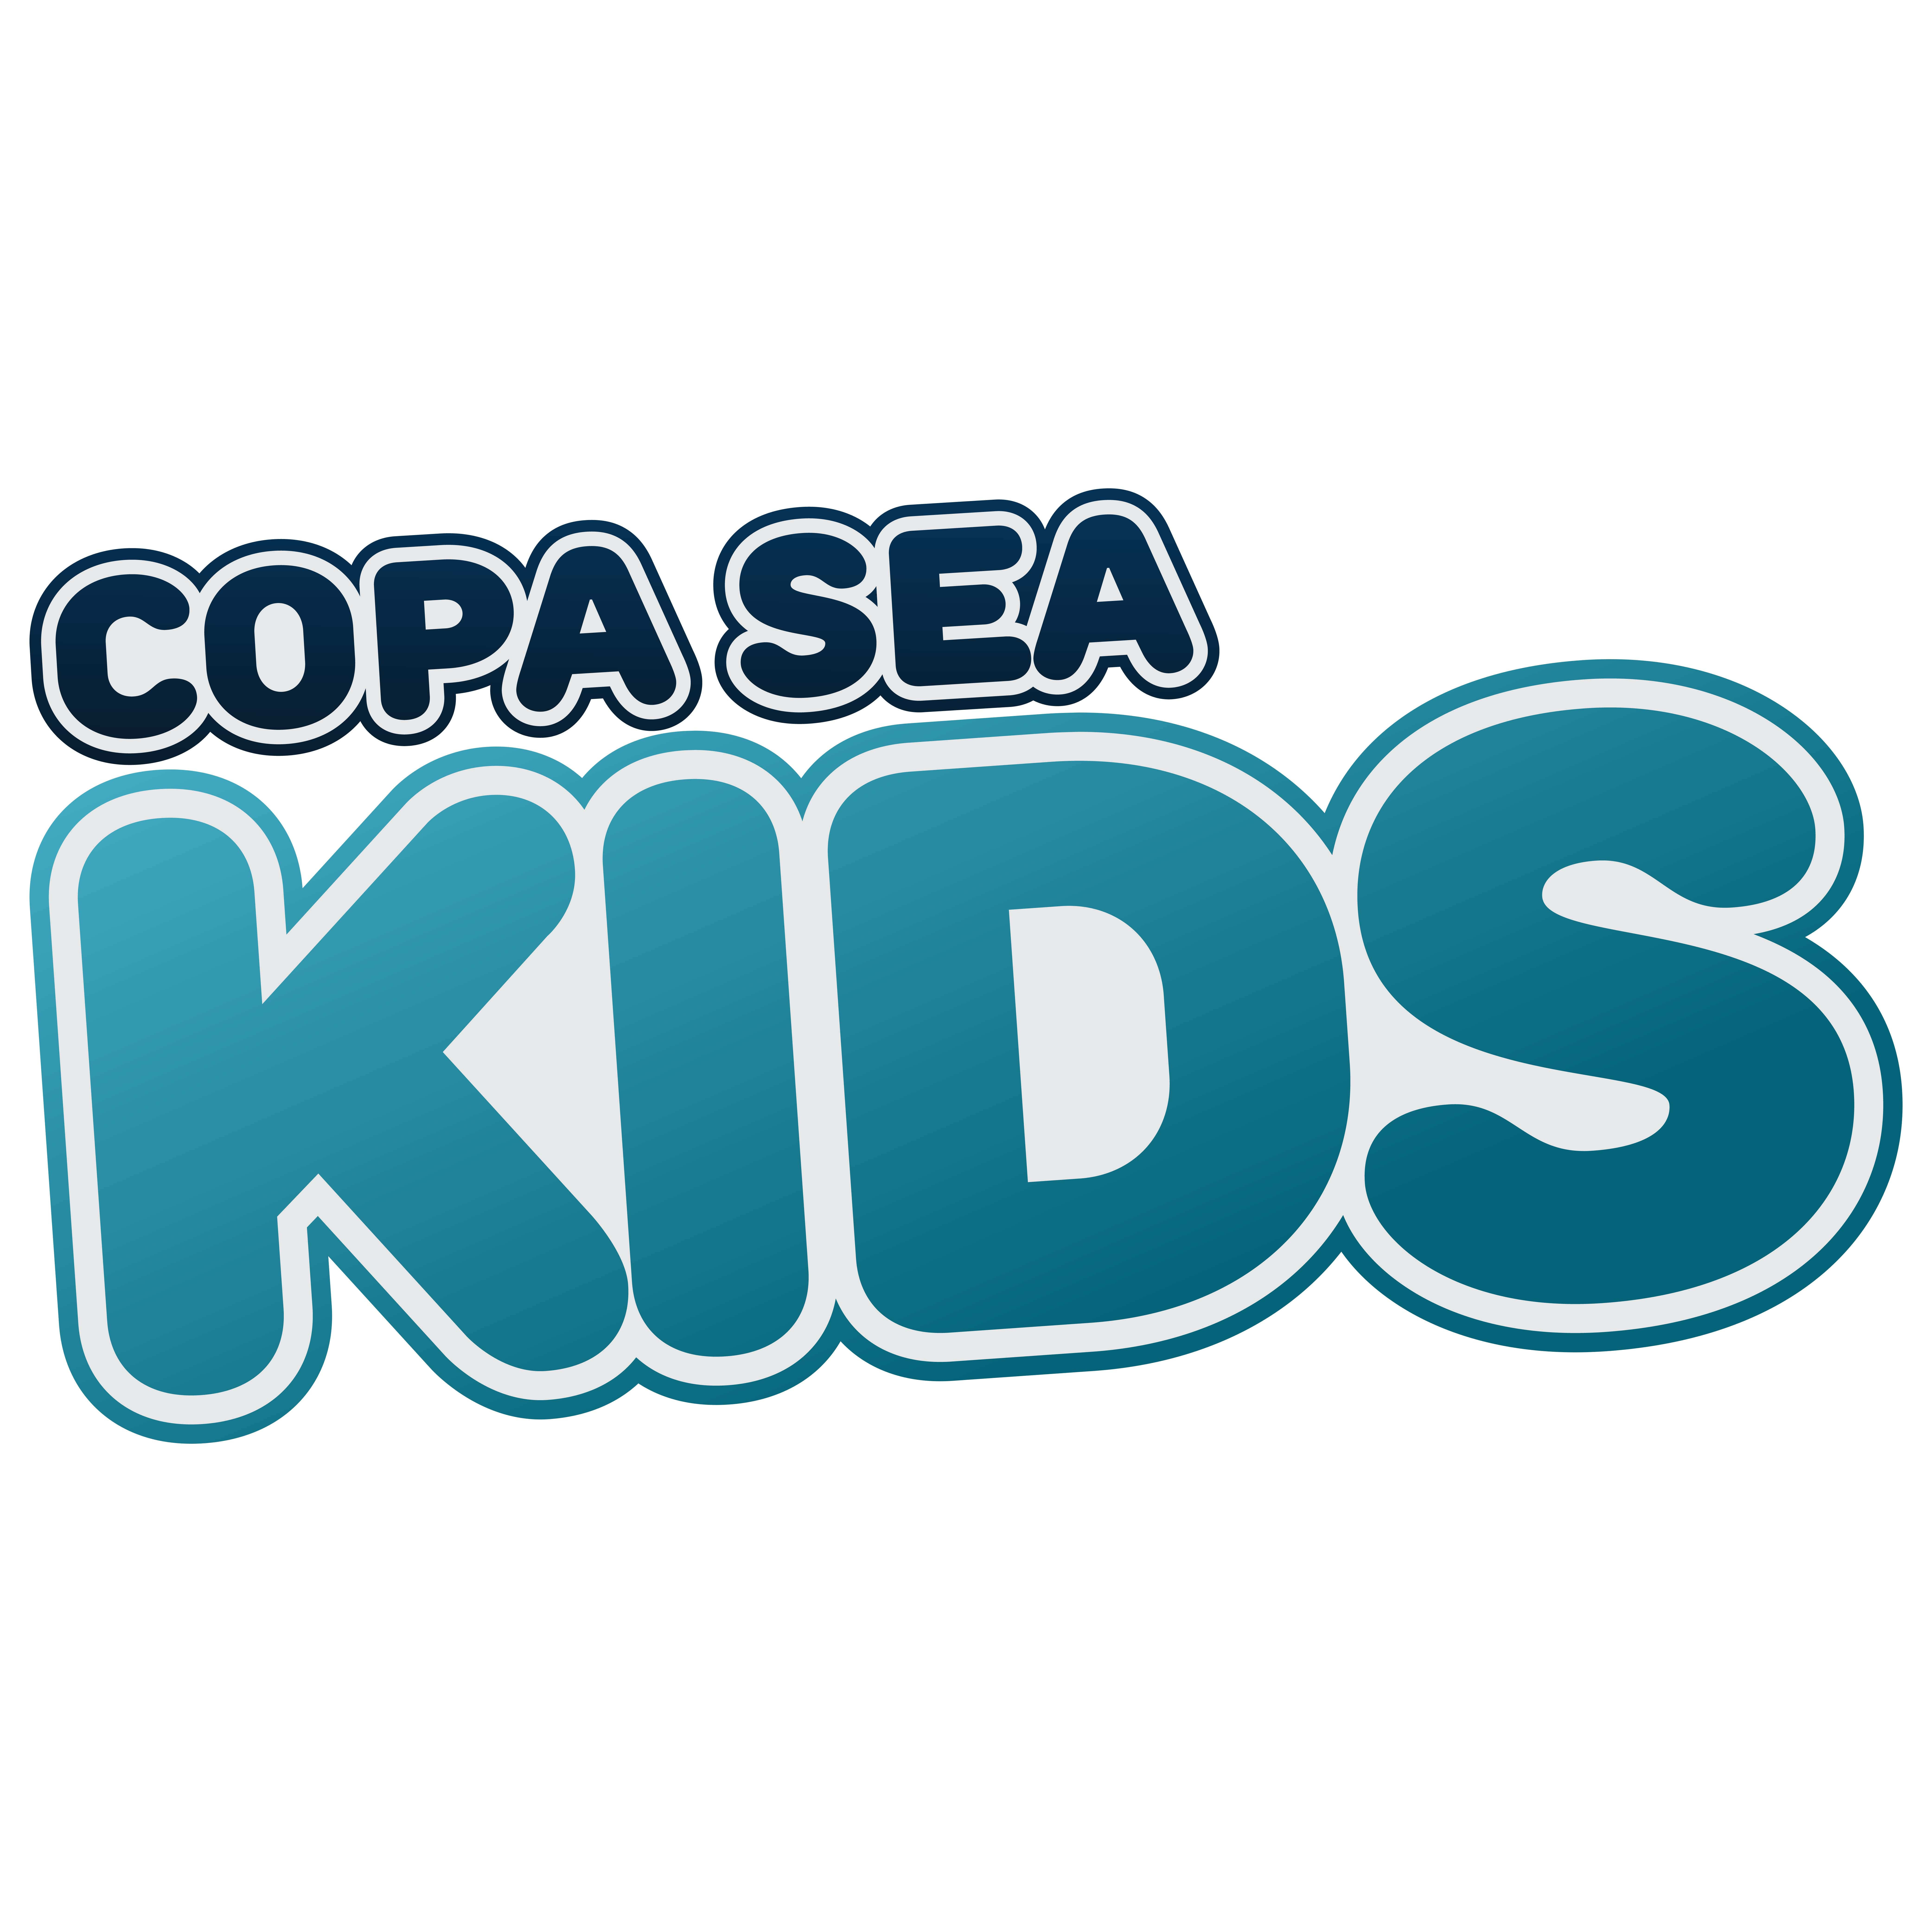 Logo COPA SEA KIDS 2019